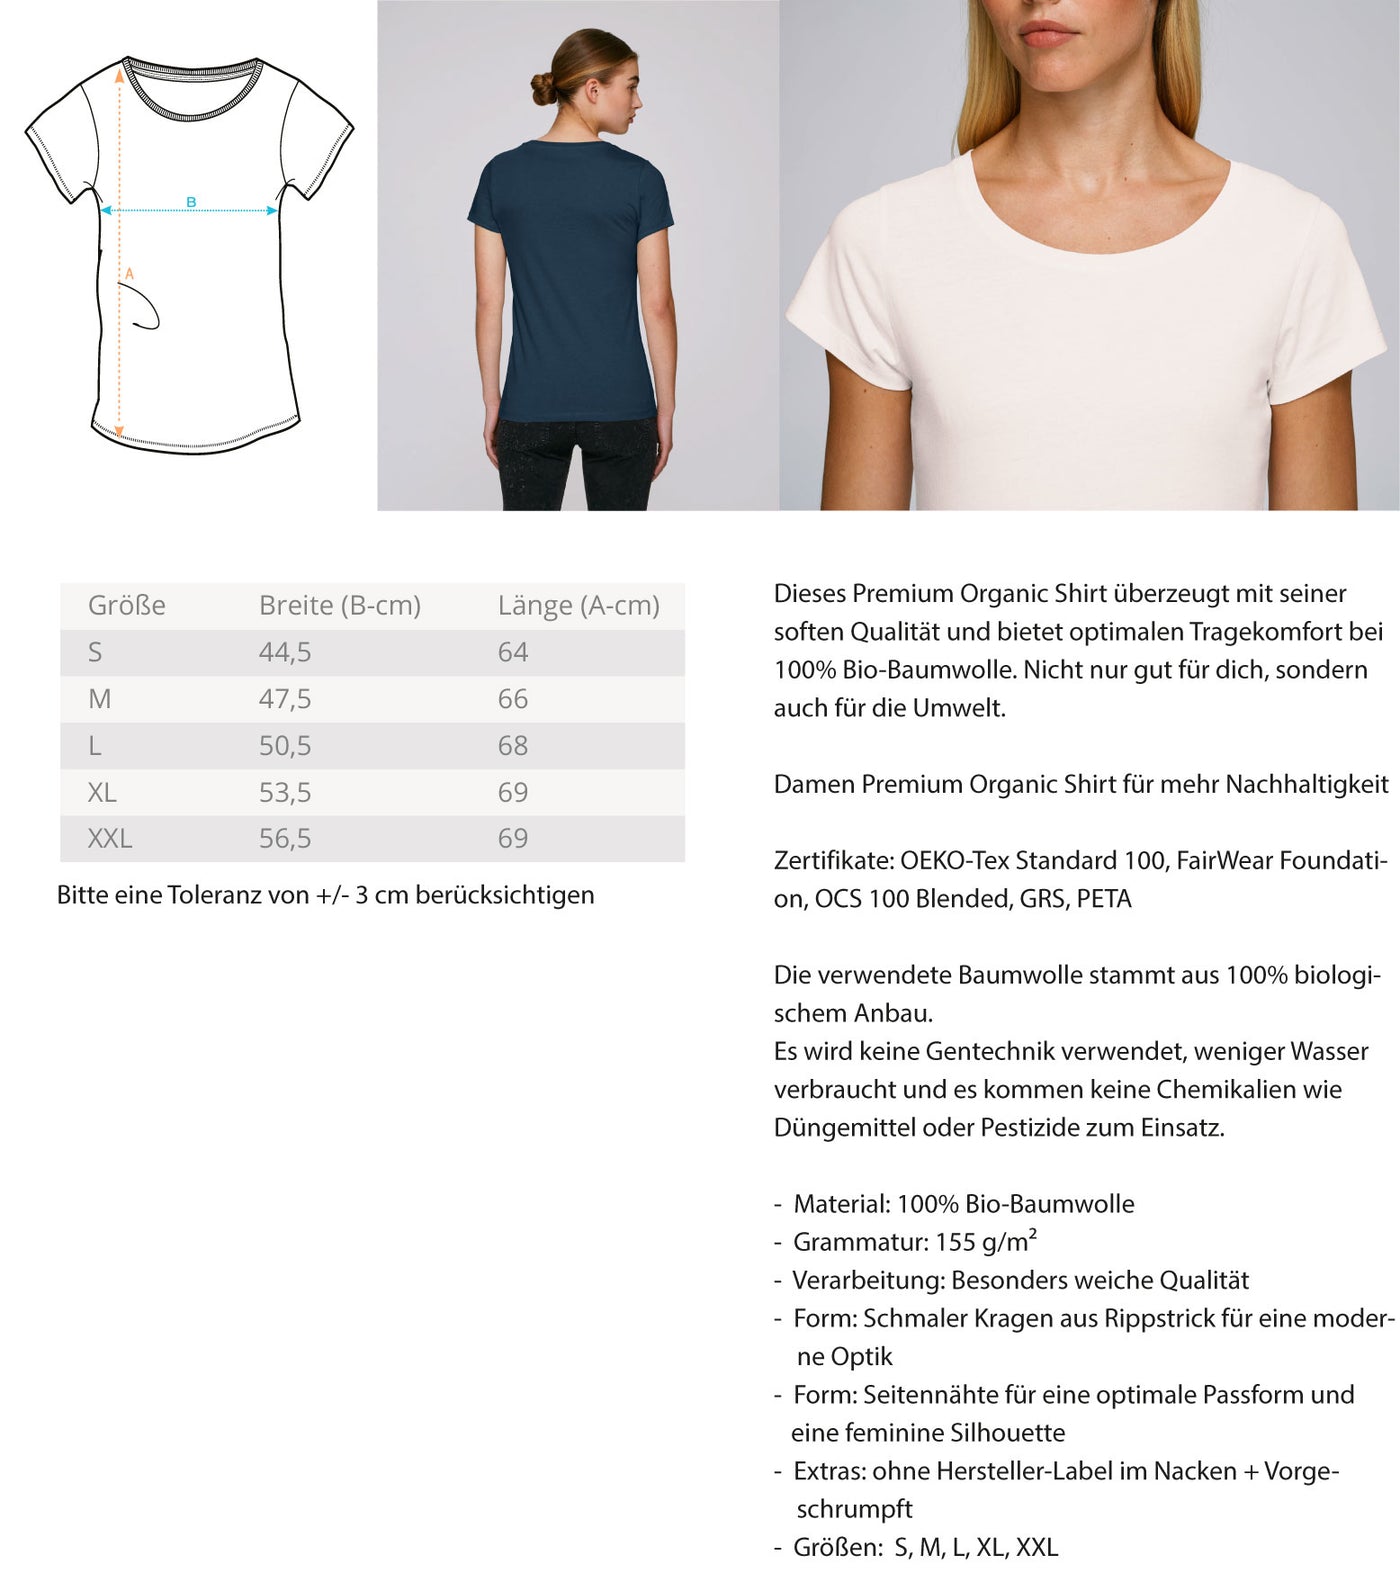 Never walk alone - Damen Premium Organic T-Shirt wandern